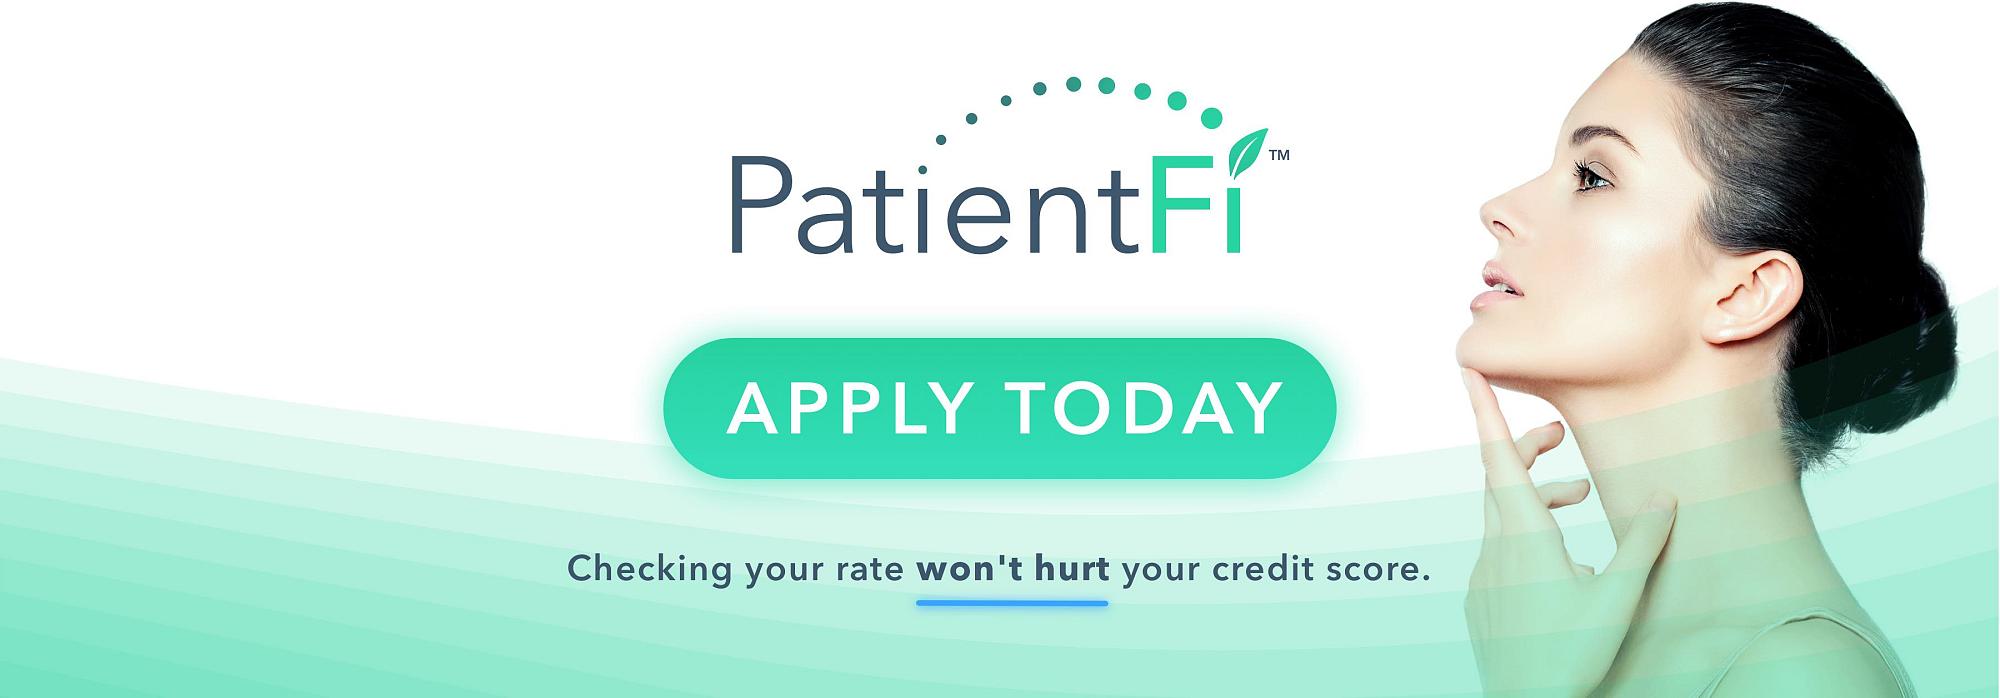 PatientFi apply today logo